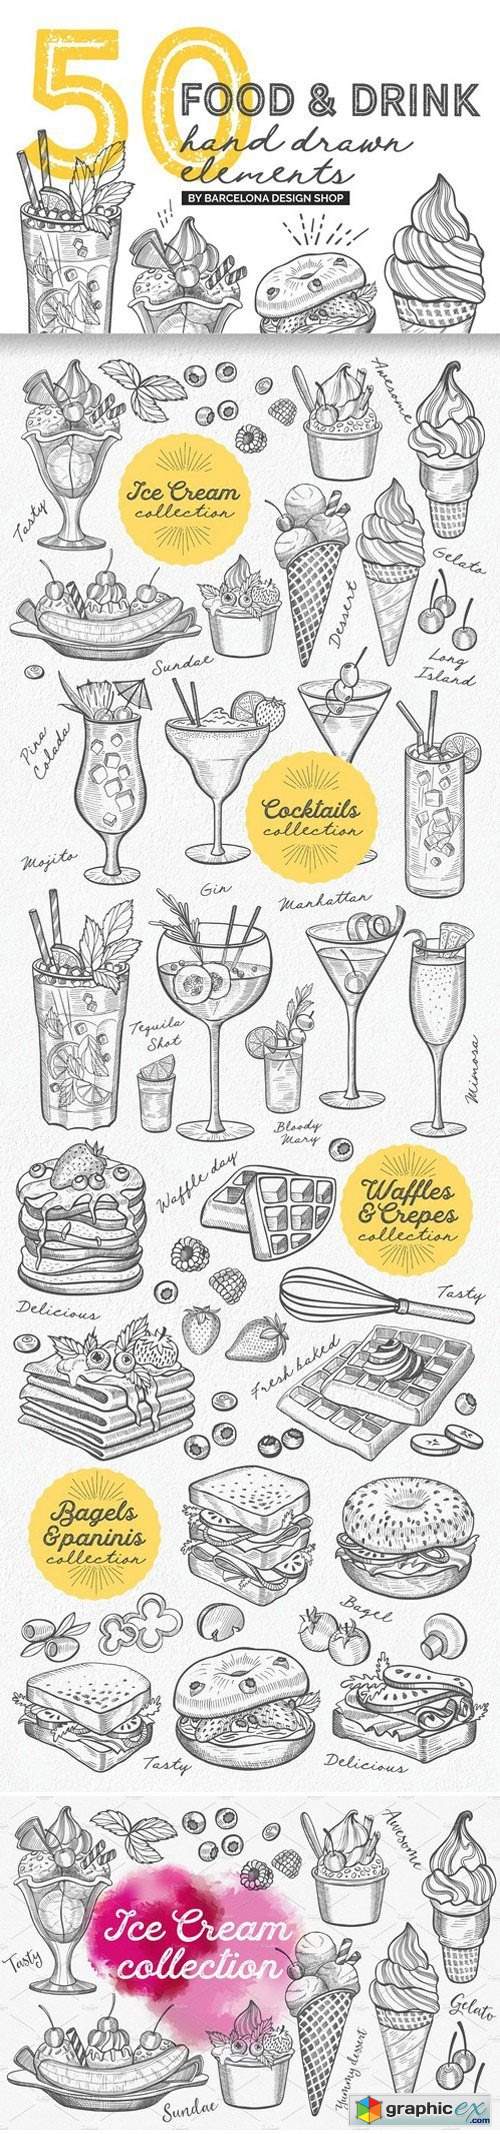 Food & Drink Illustrations